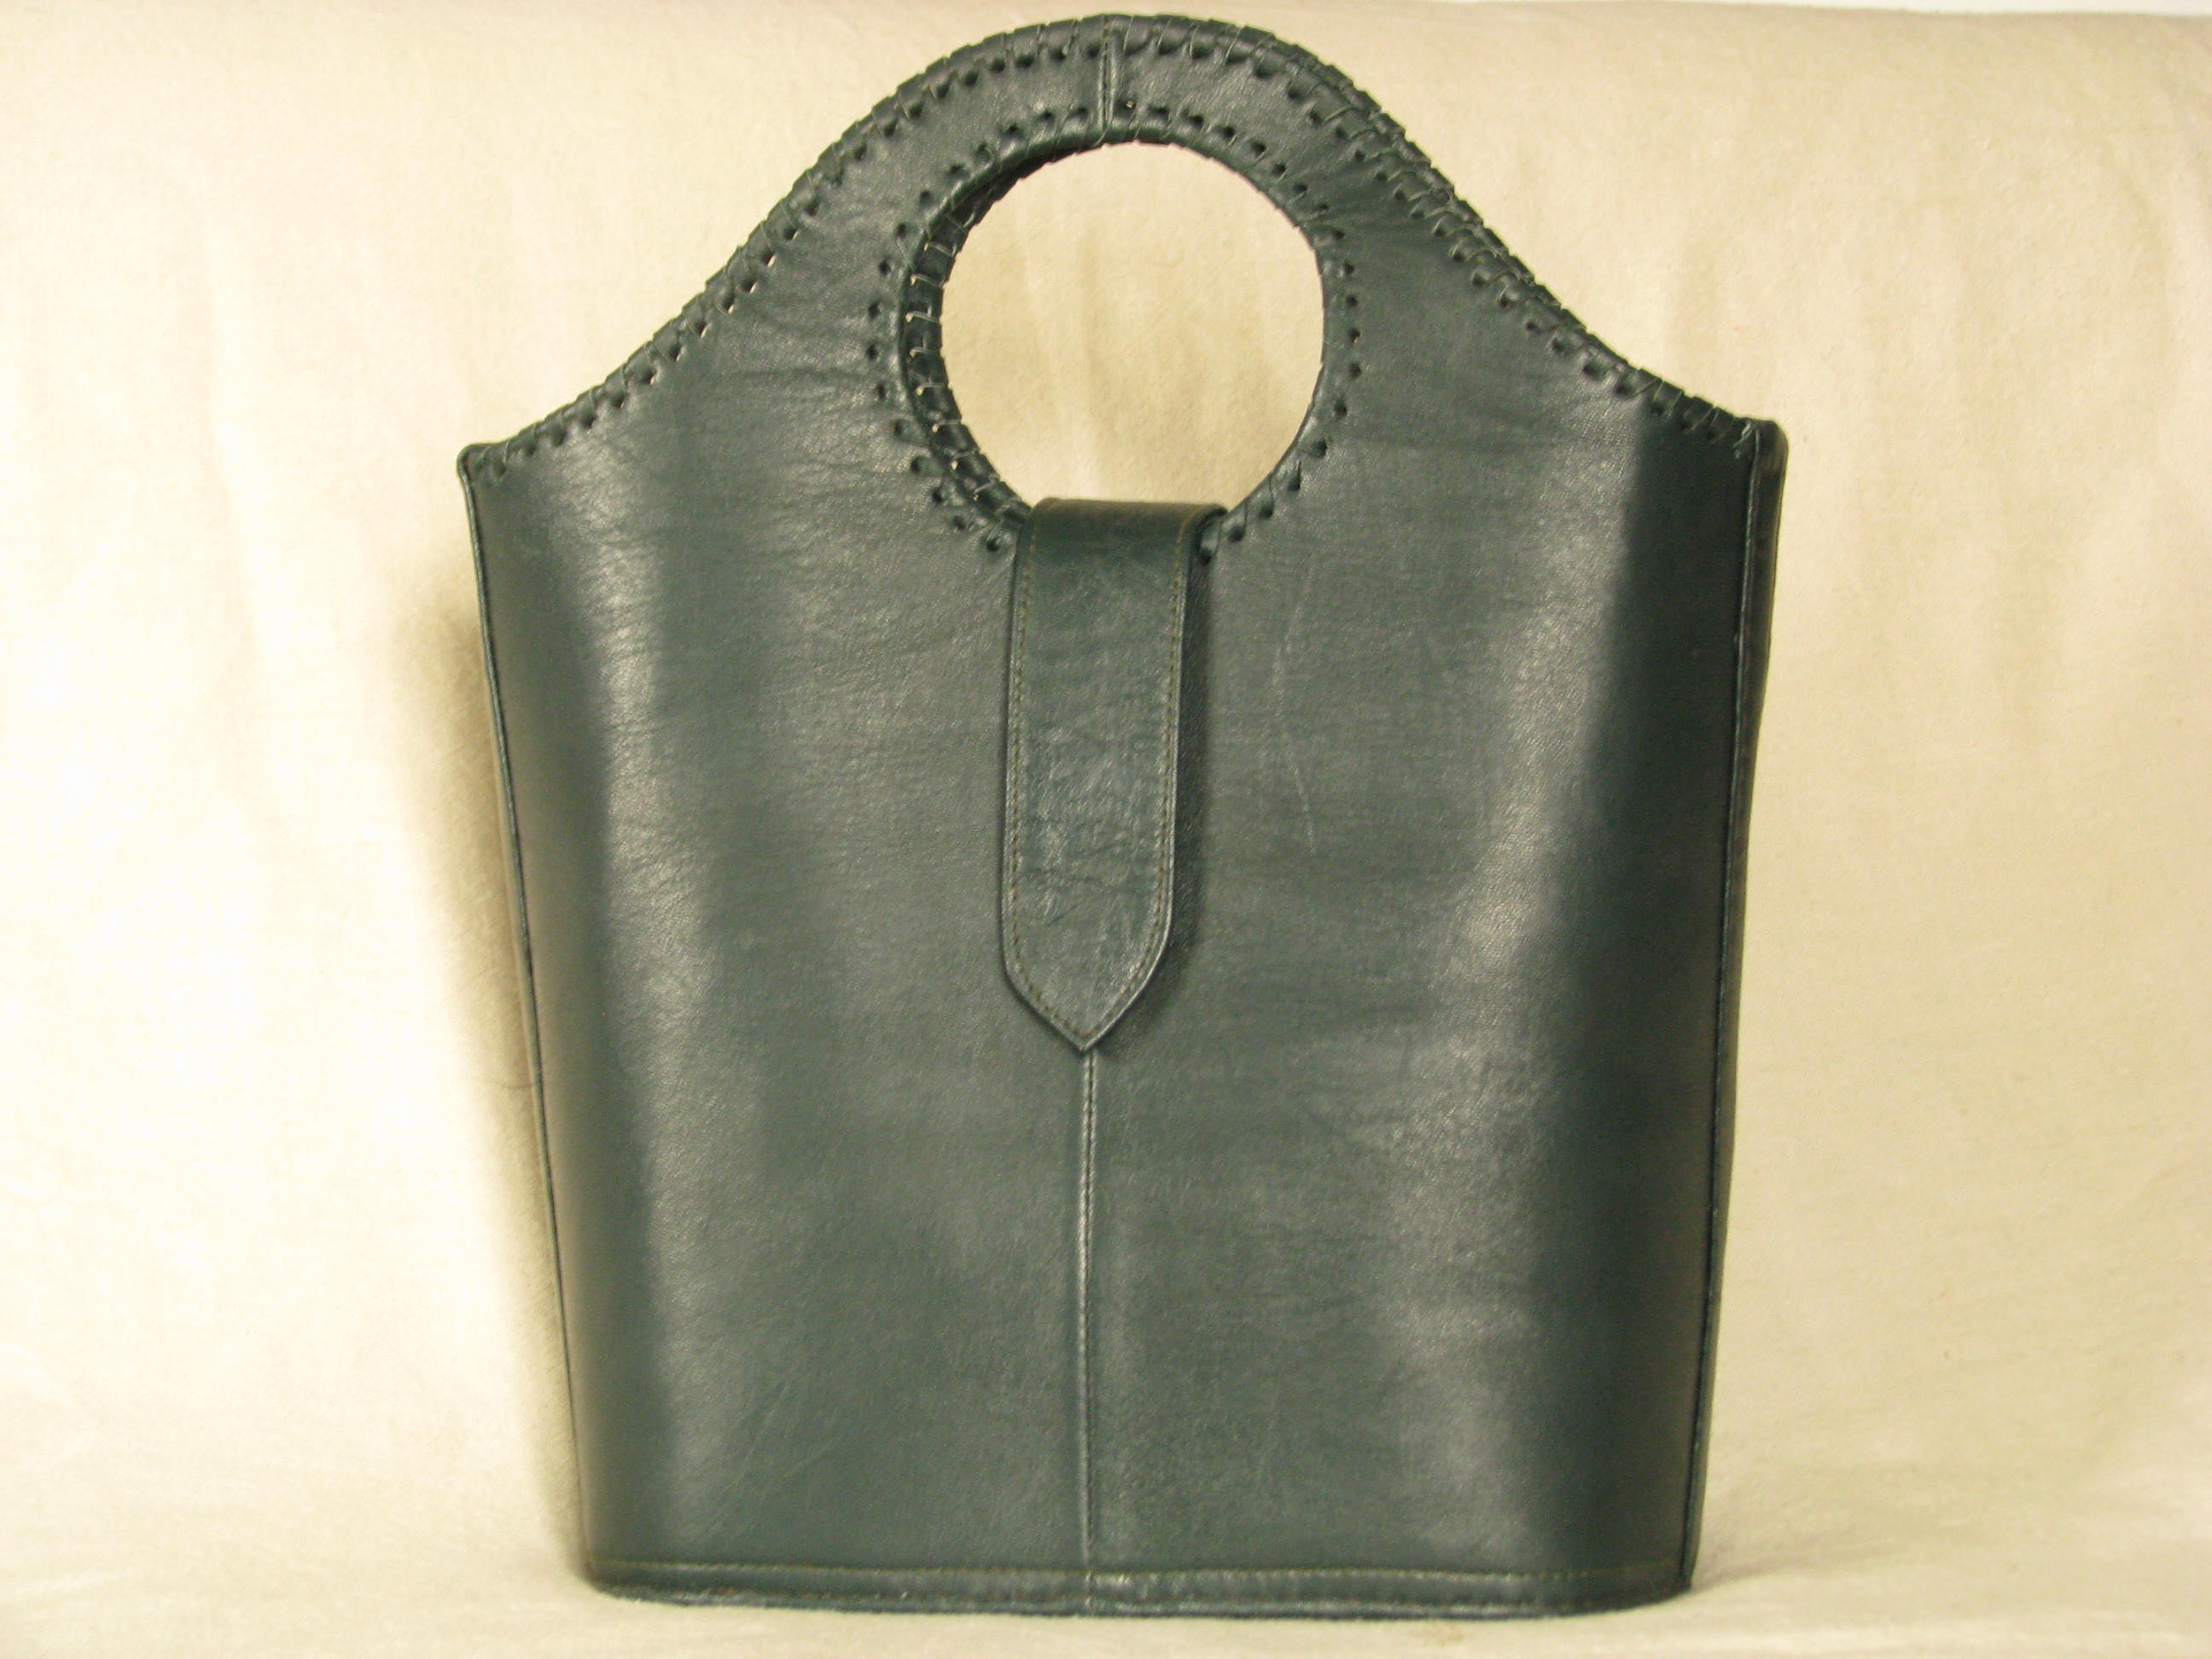 Gundara - Real Leather Shopper - dark-green - genuine leather - from Afghanistan - fair trade 